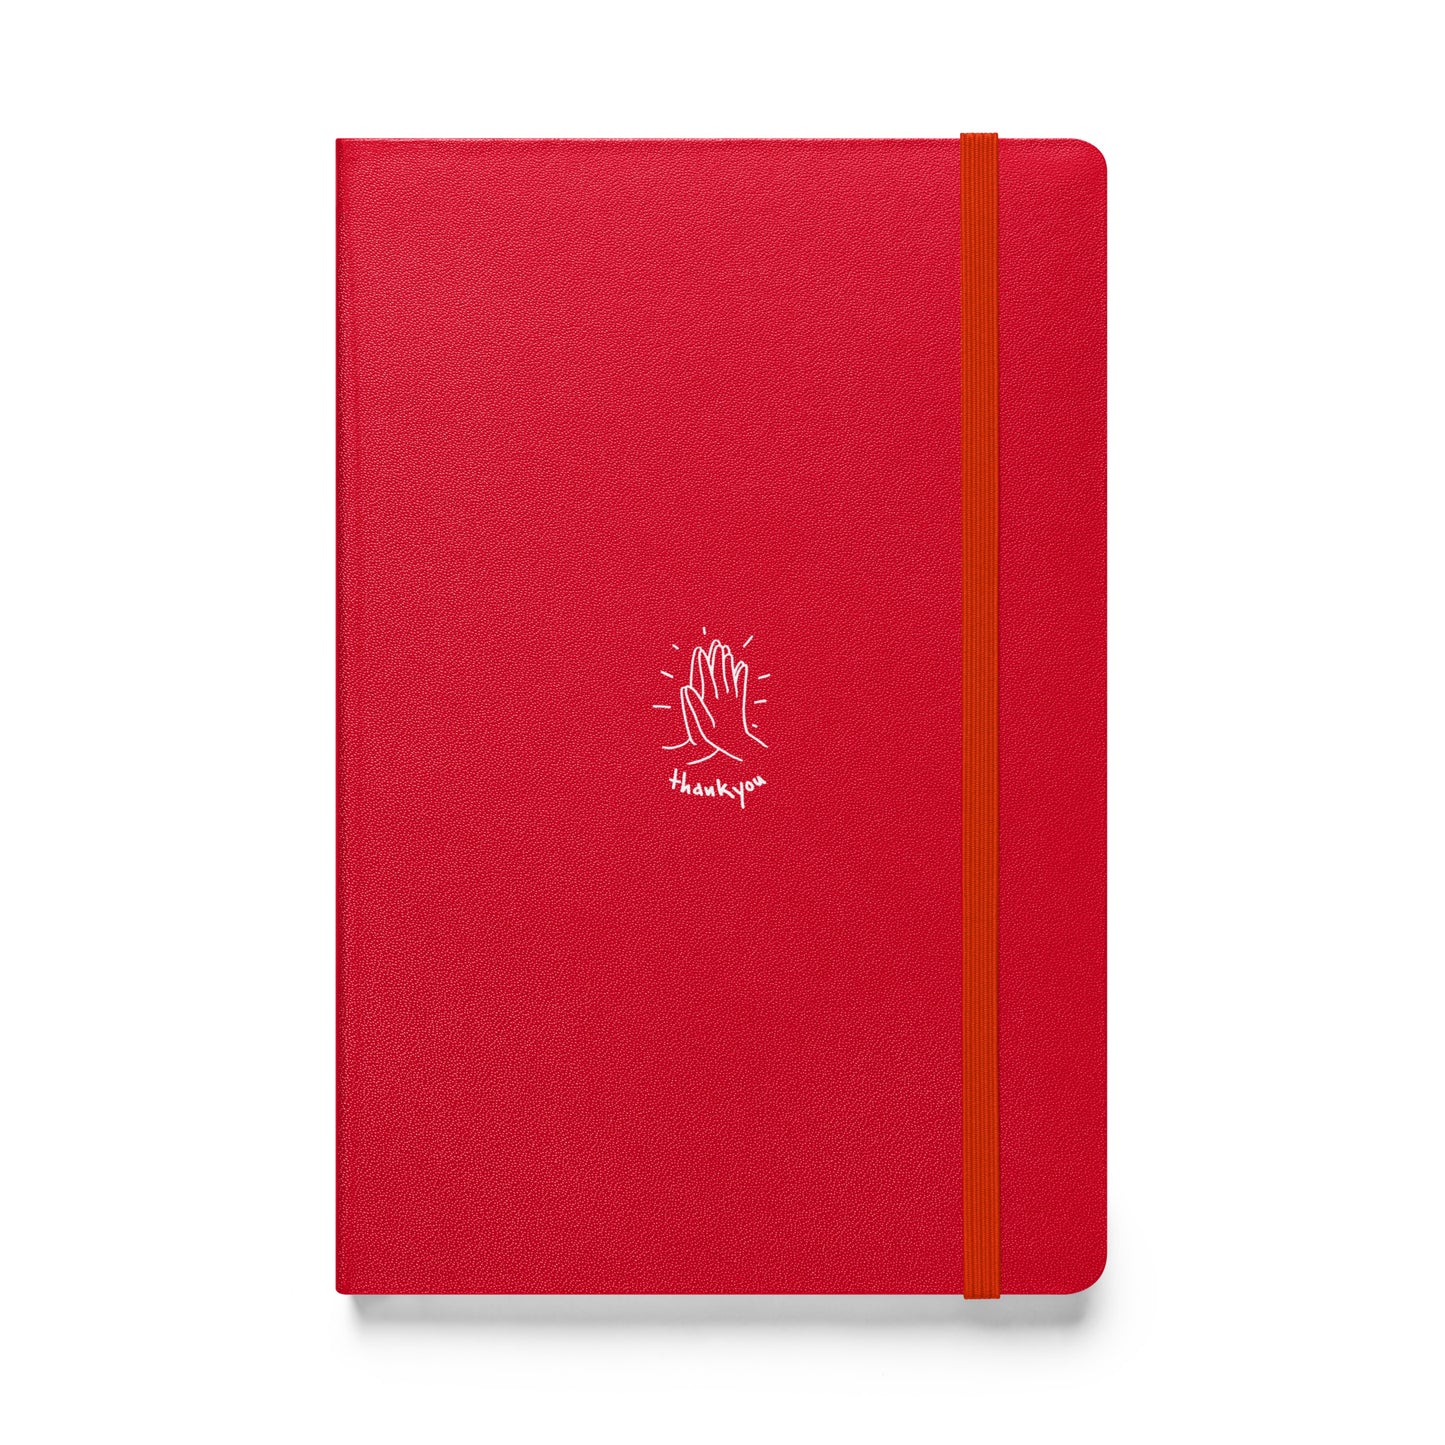 The Hi-Five Notebook